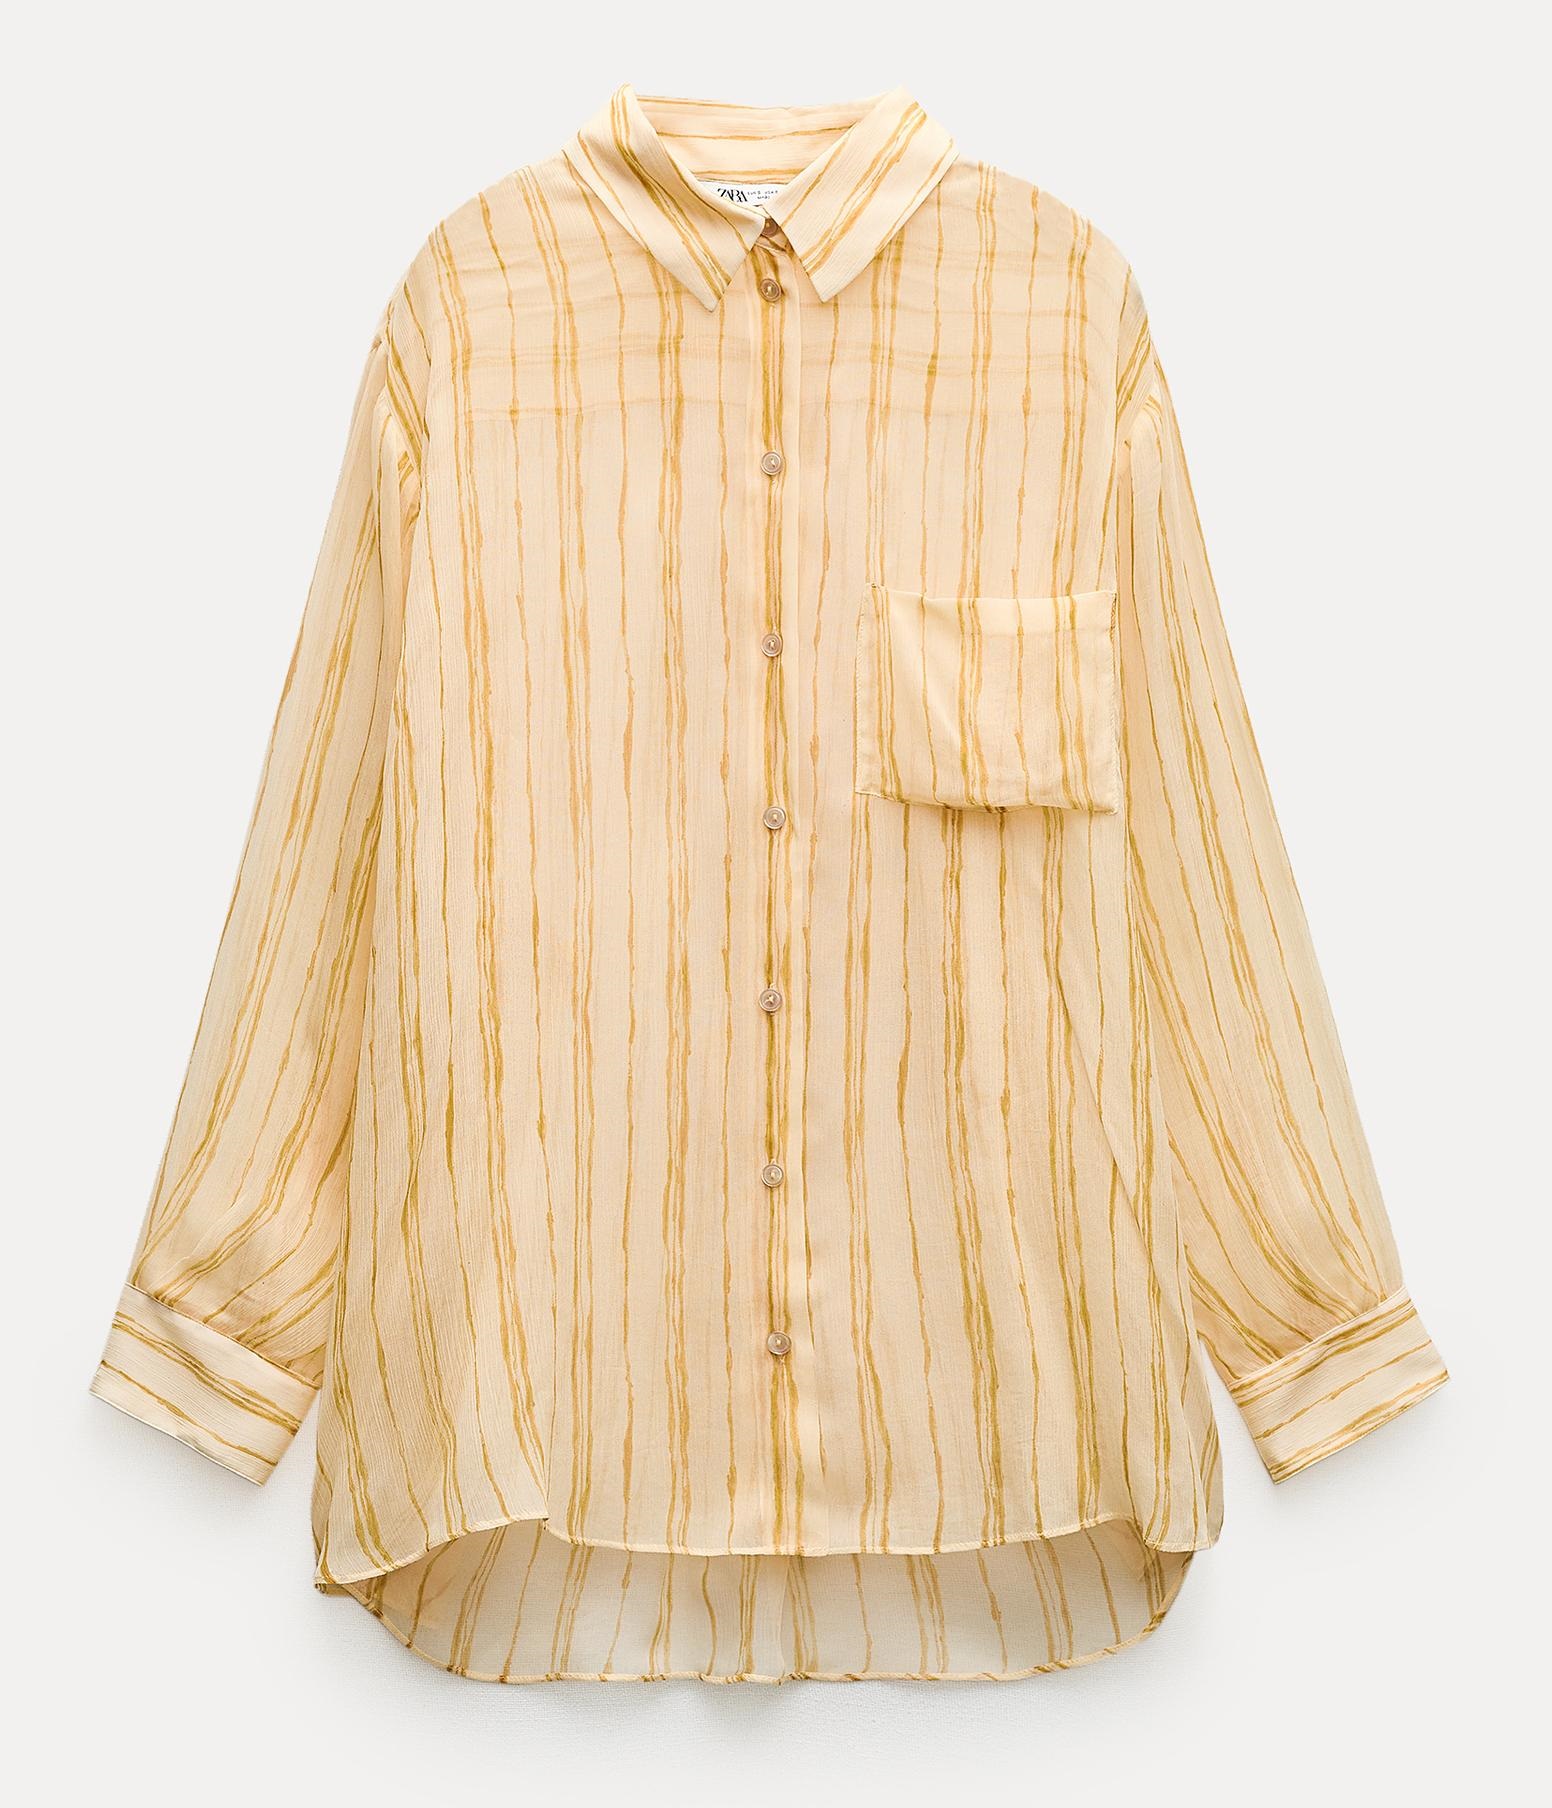 Рубашка Zara Zw Collection Striped With Pocket, мультиколор рубашка zara cotton with pocket голубой